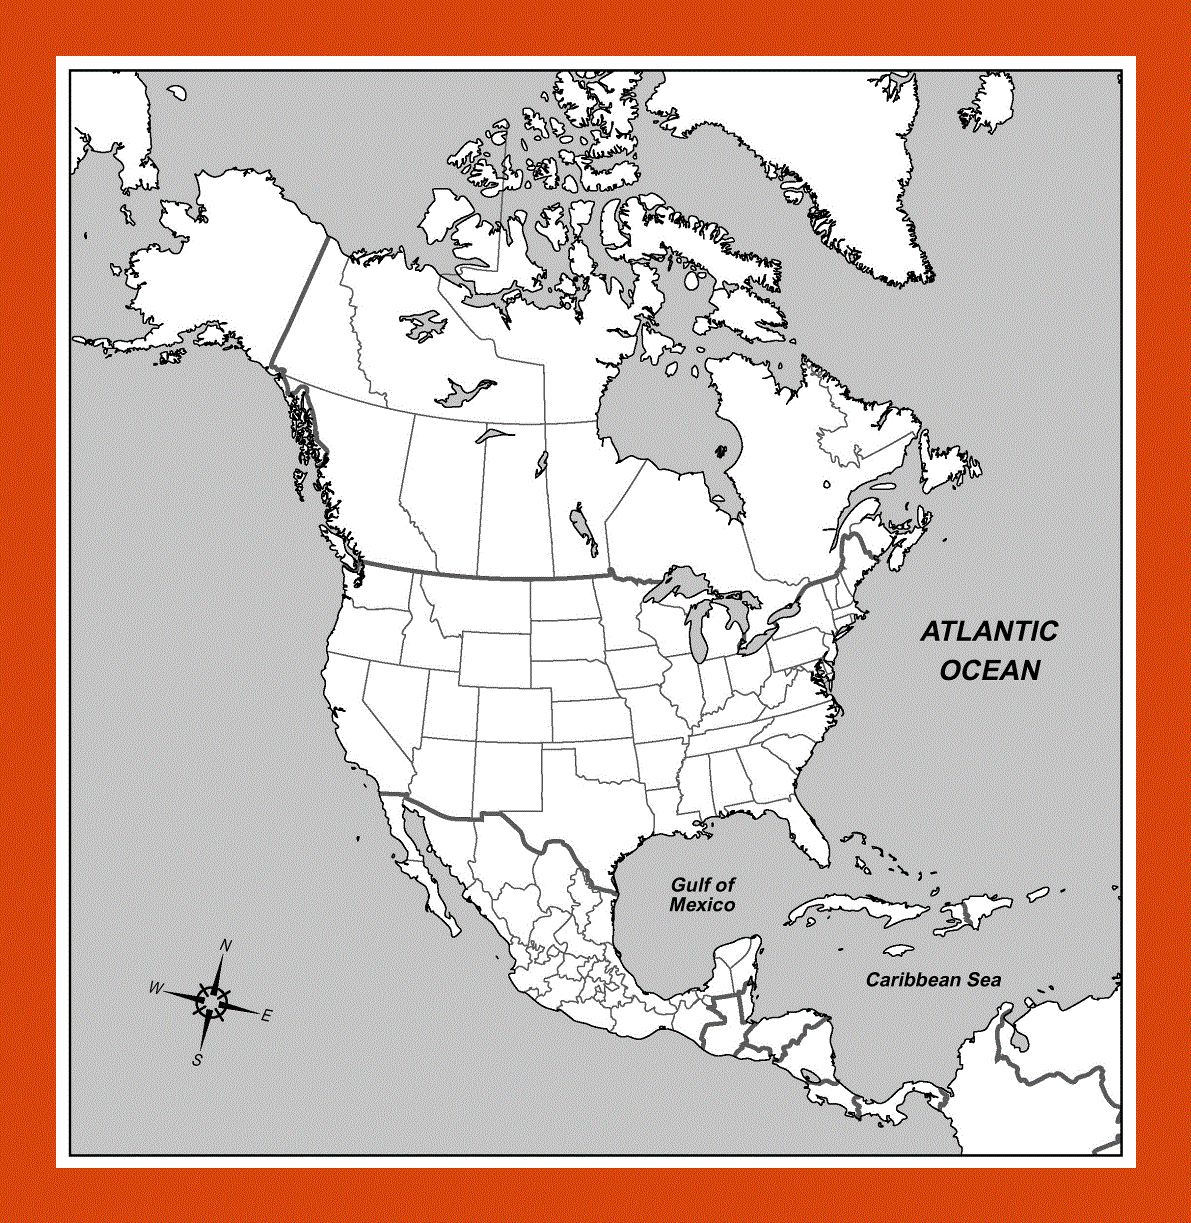 Contour political map of North America